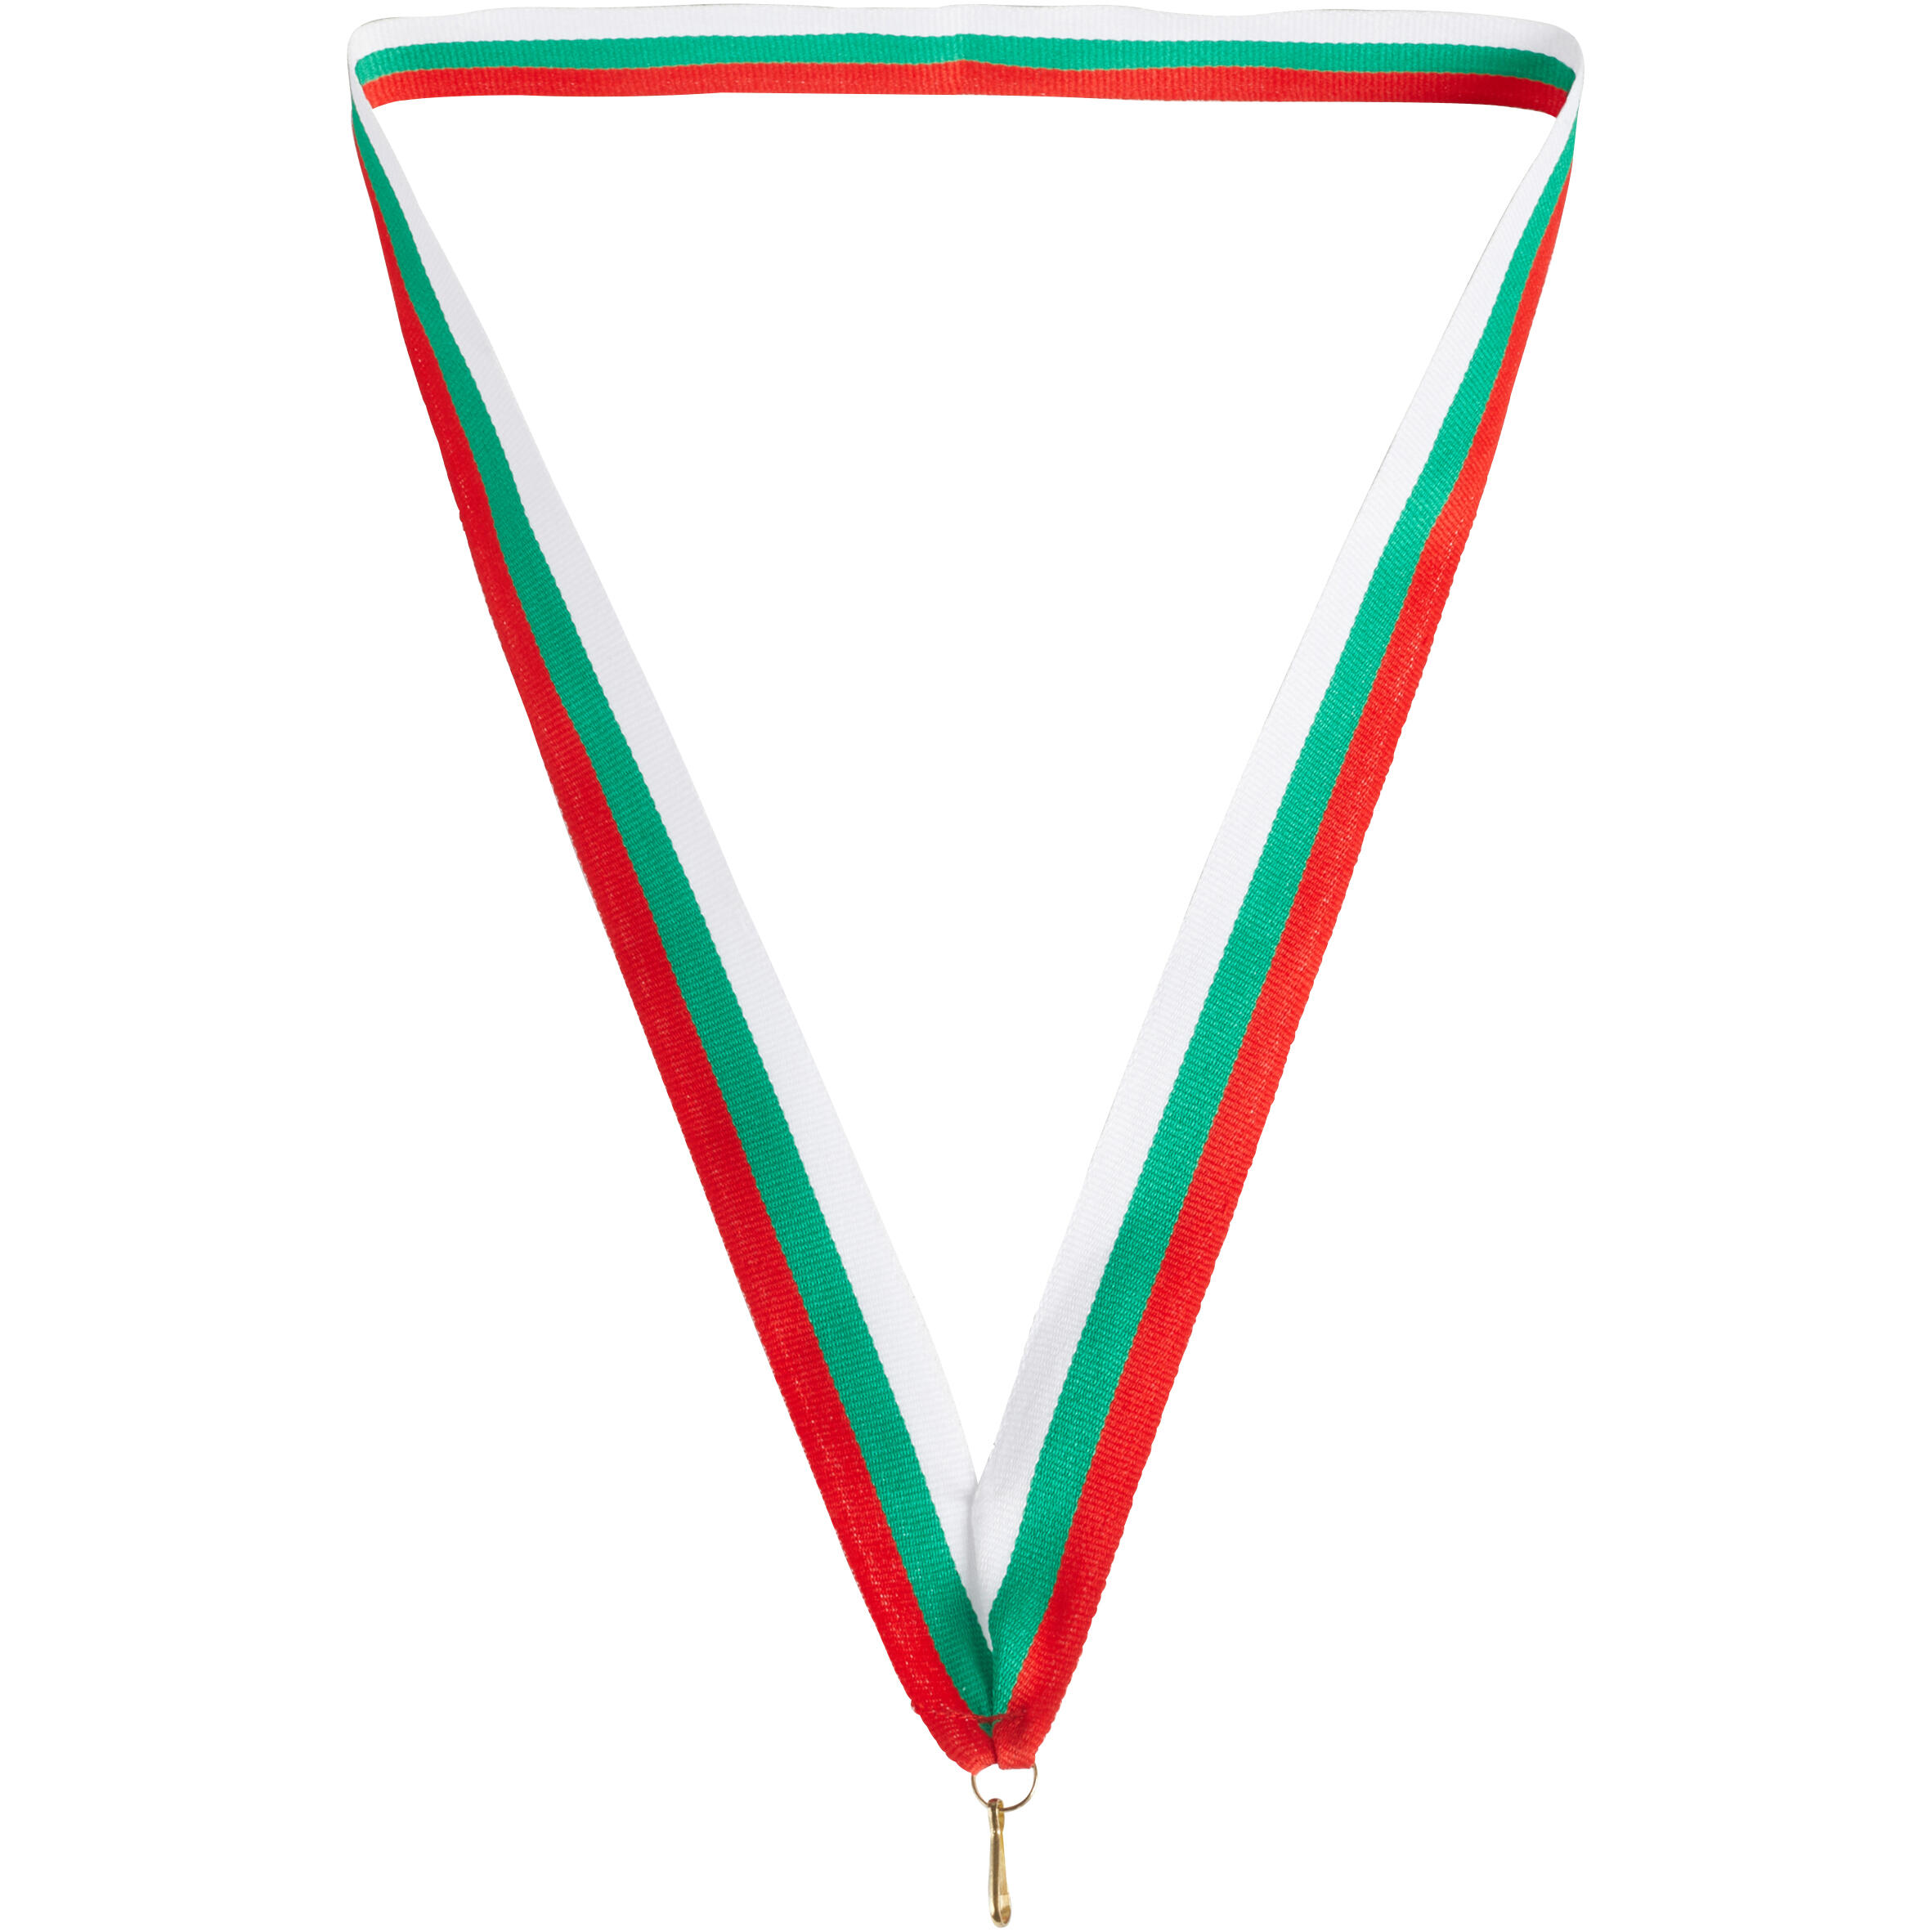 Panglică Medalie 22mm Bulgaria La Oferta Online decathlon imagine La Oferta Online